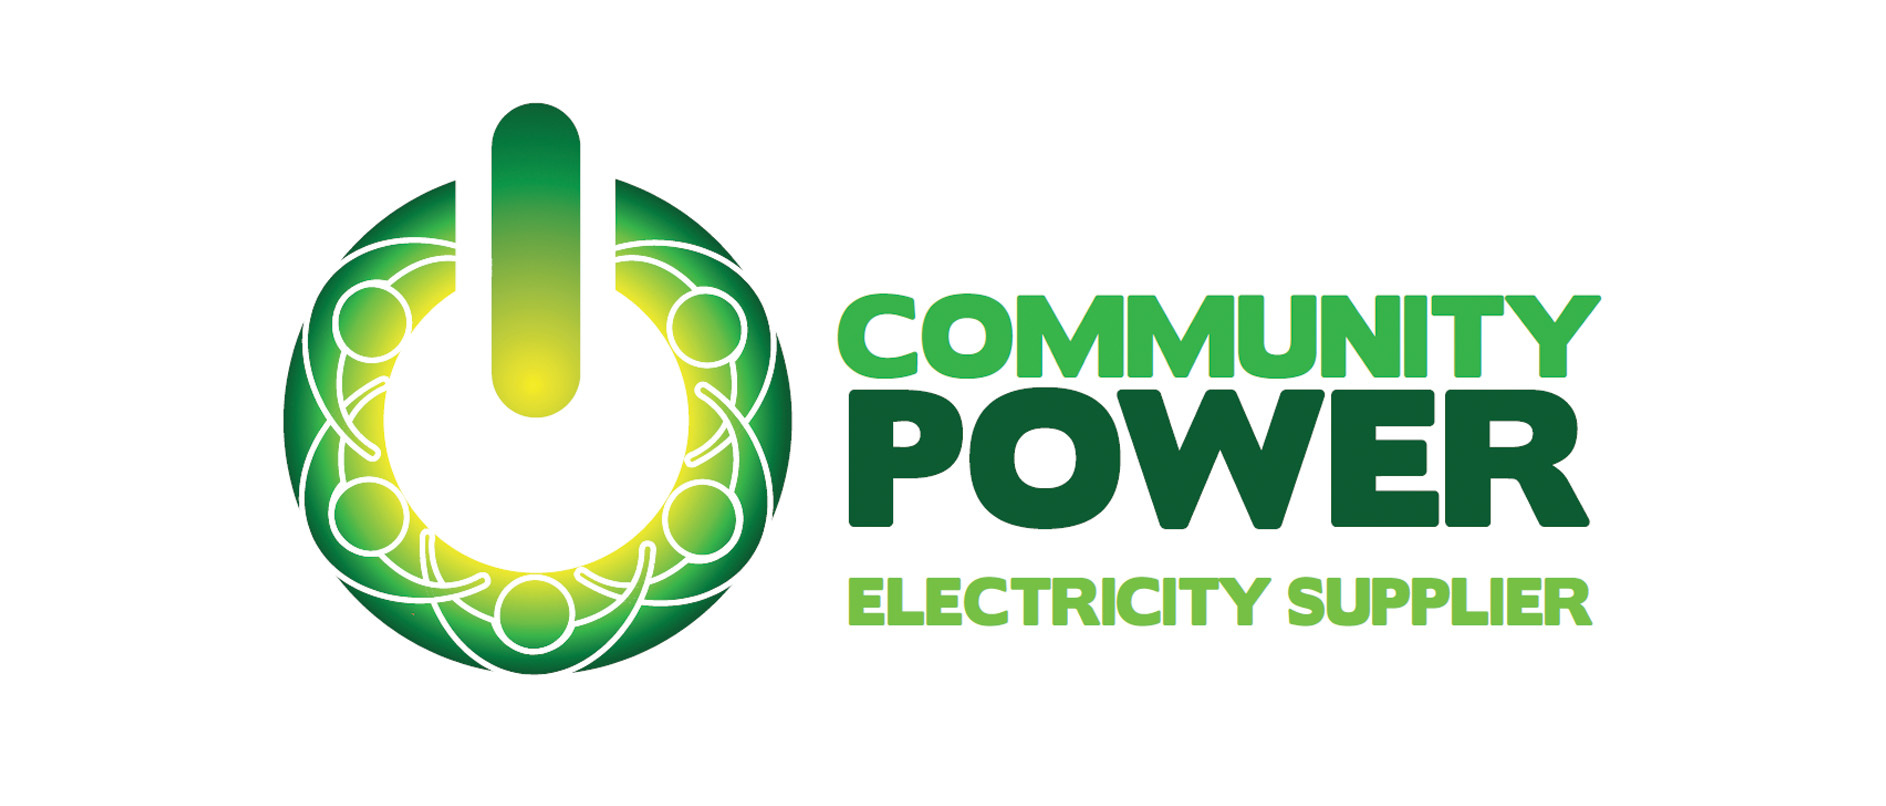 Community Power Ireland